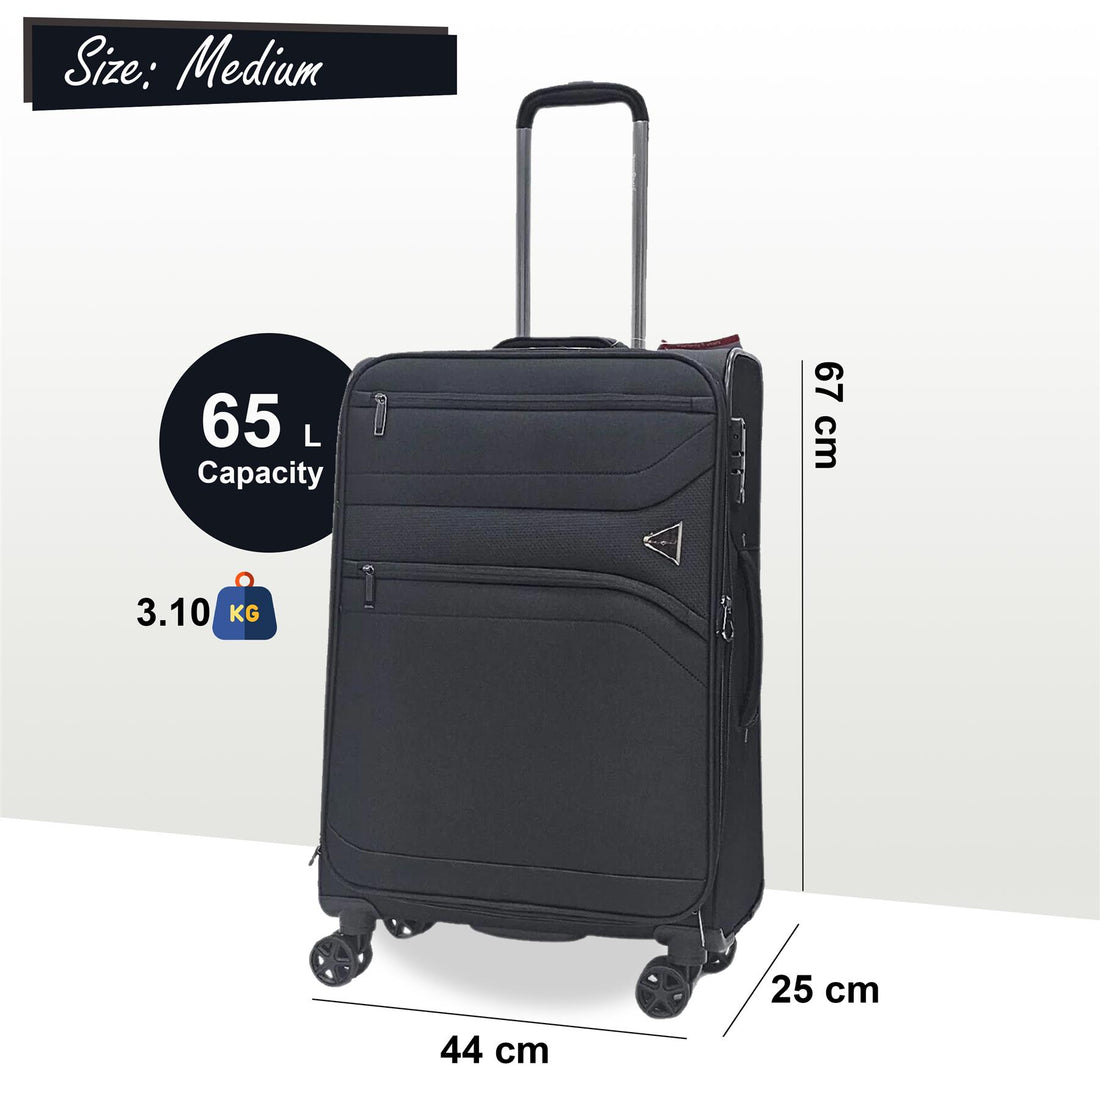 Clayton Medium Soft Shell Suitcase in Black